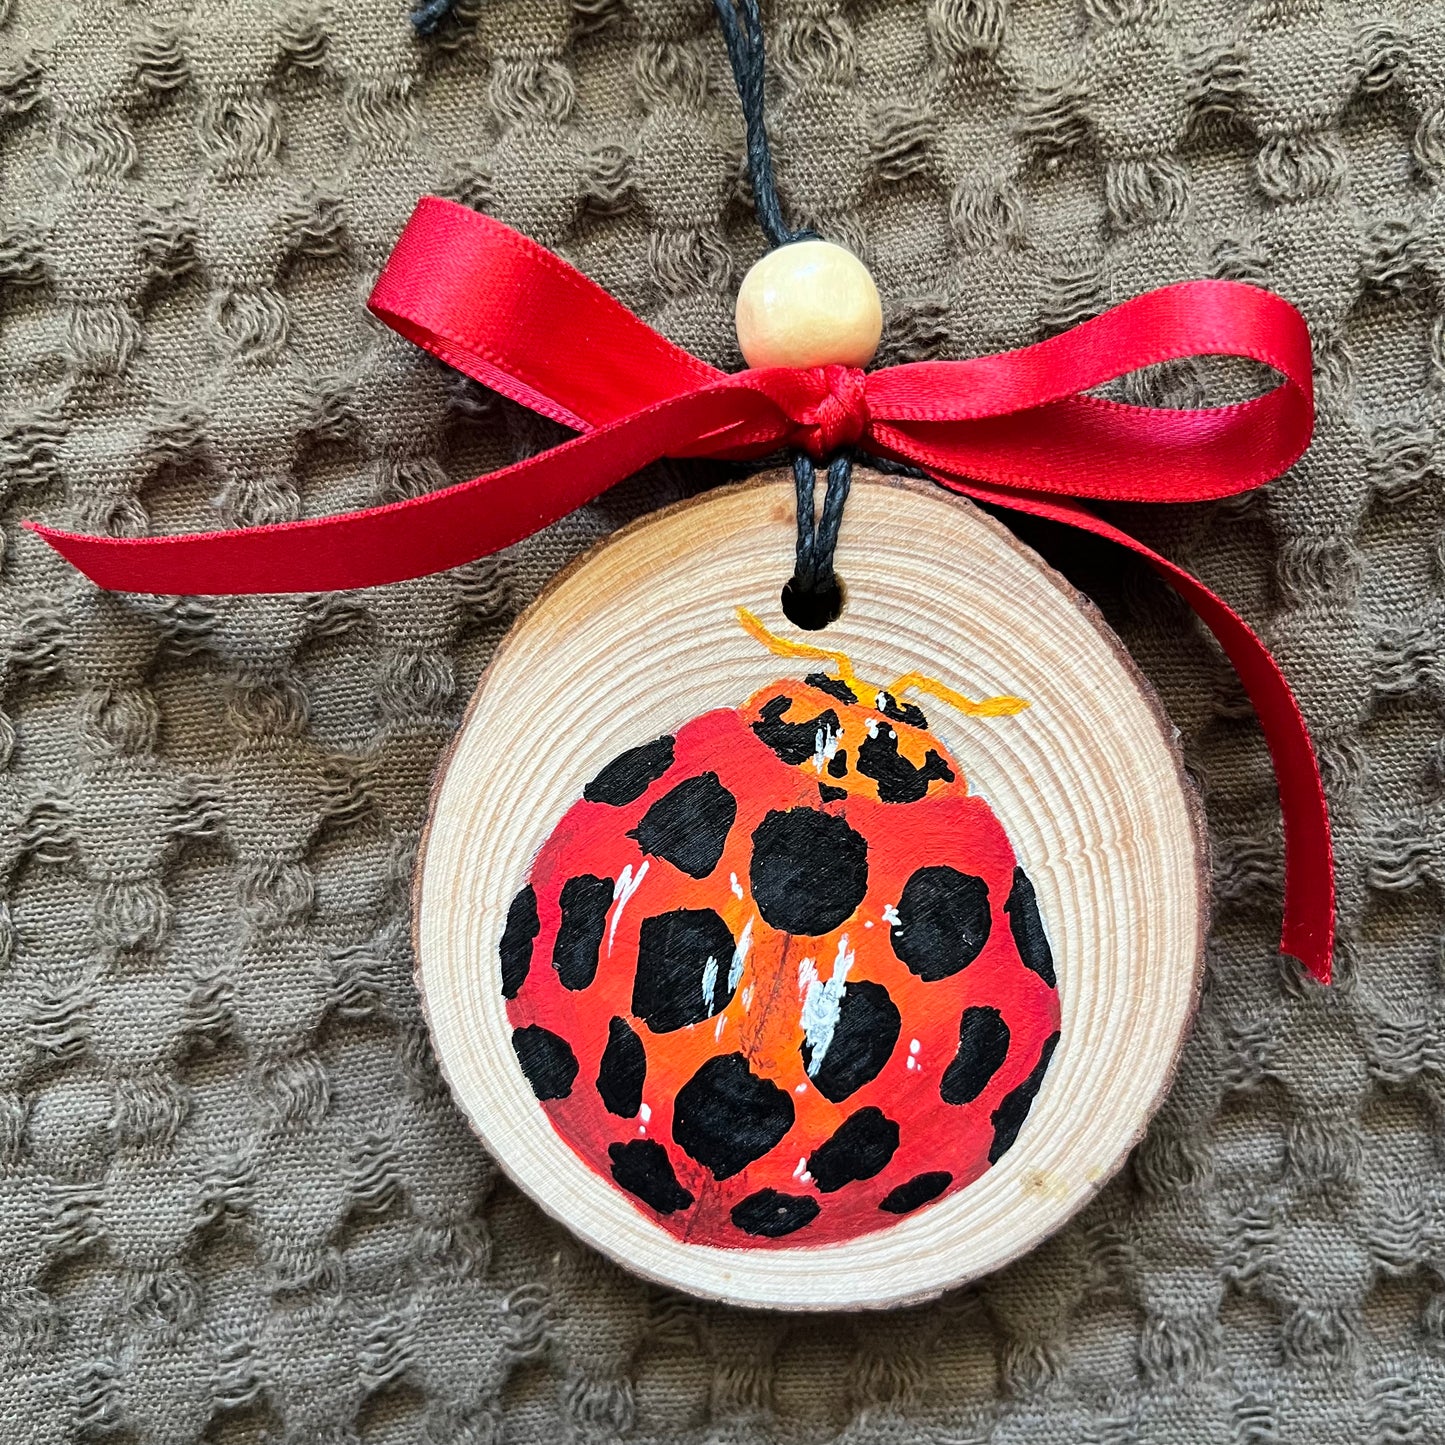 Ladybird Ornament